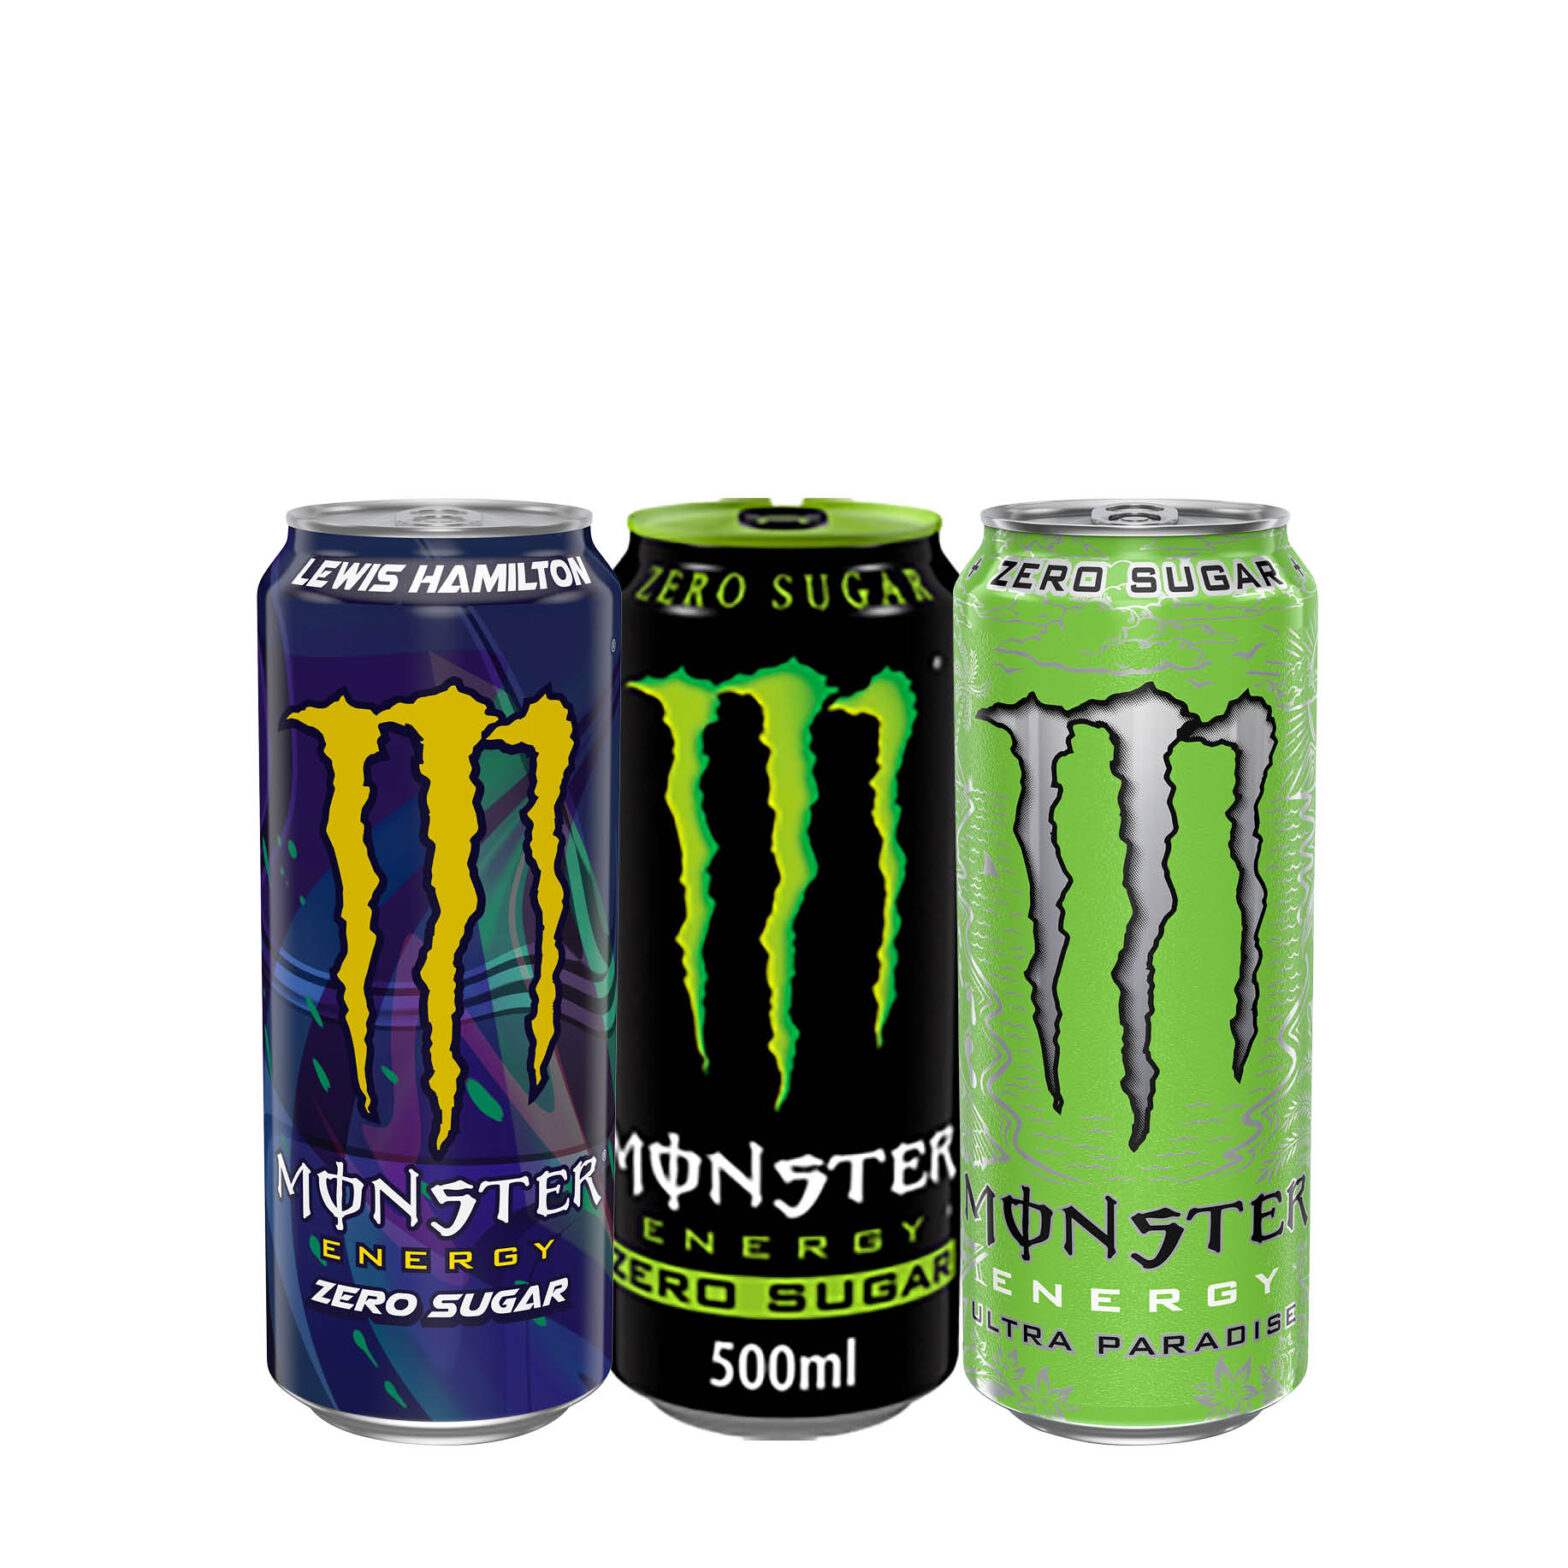 Monster Lewis Hamilton Zero Sugar Can / Monster Energy Zero Sugar Original Can / Monster Energy Ultra Paradise Can